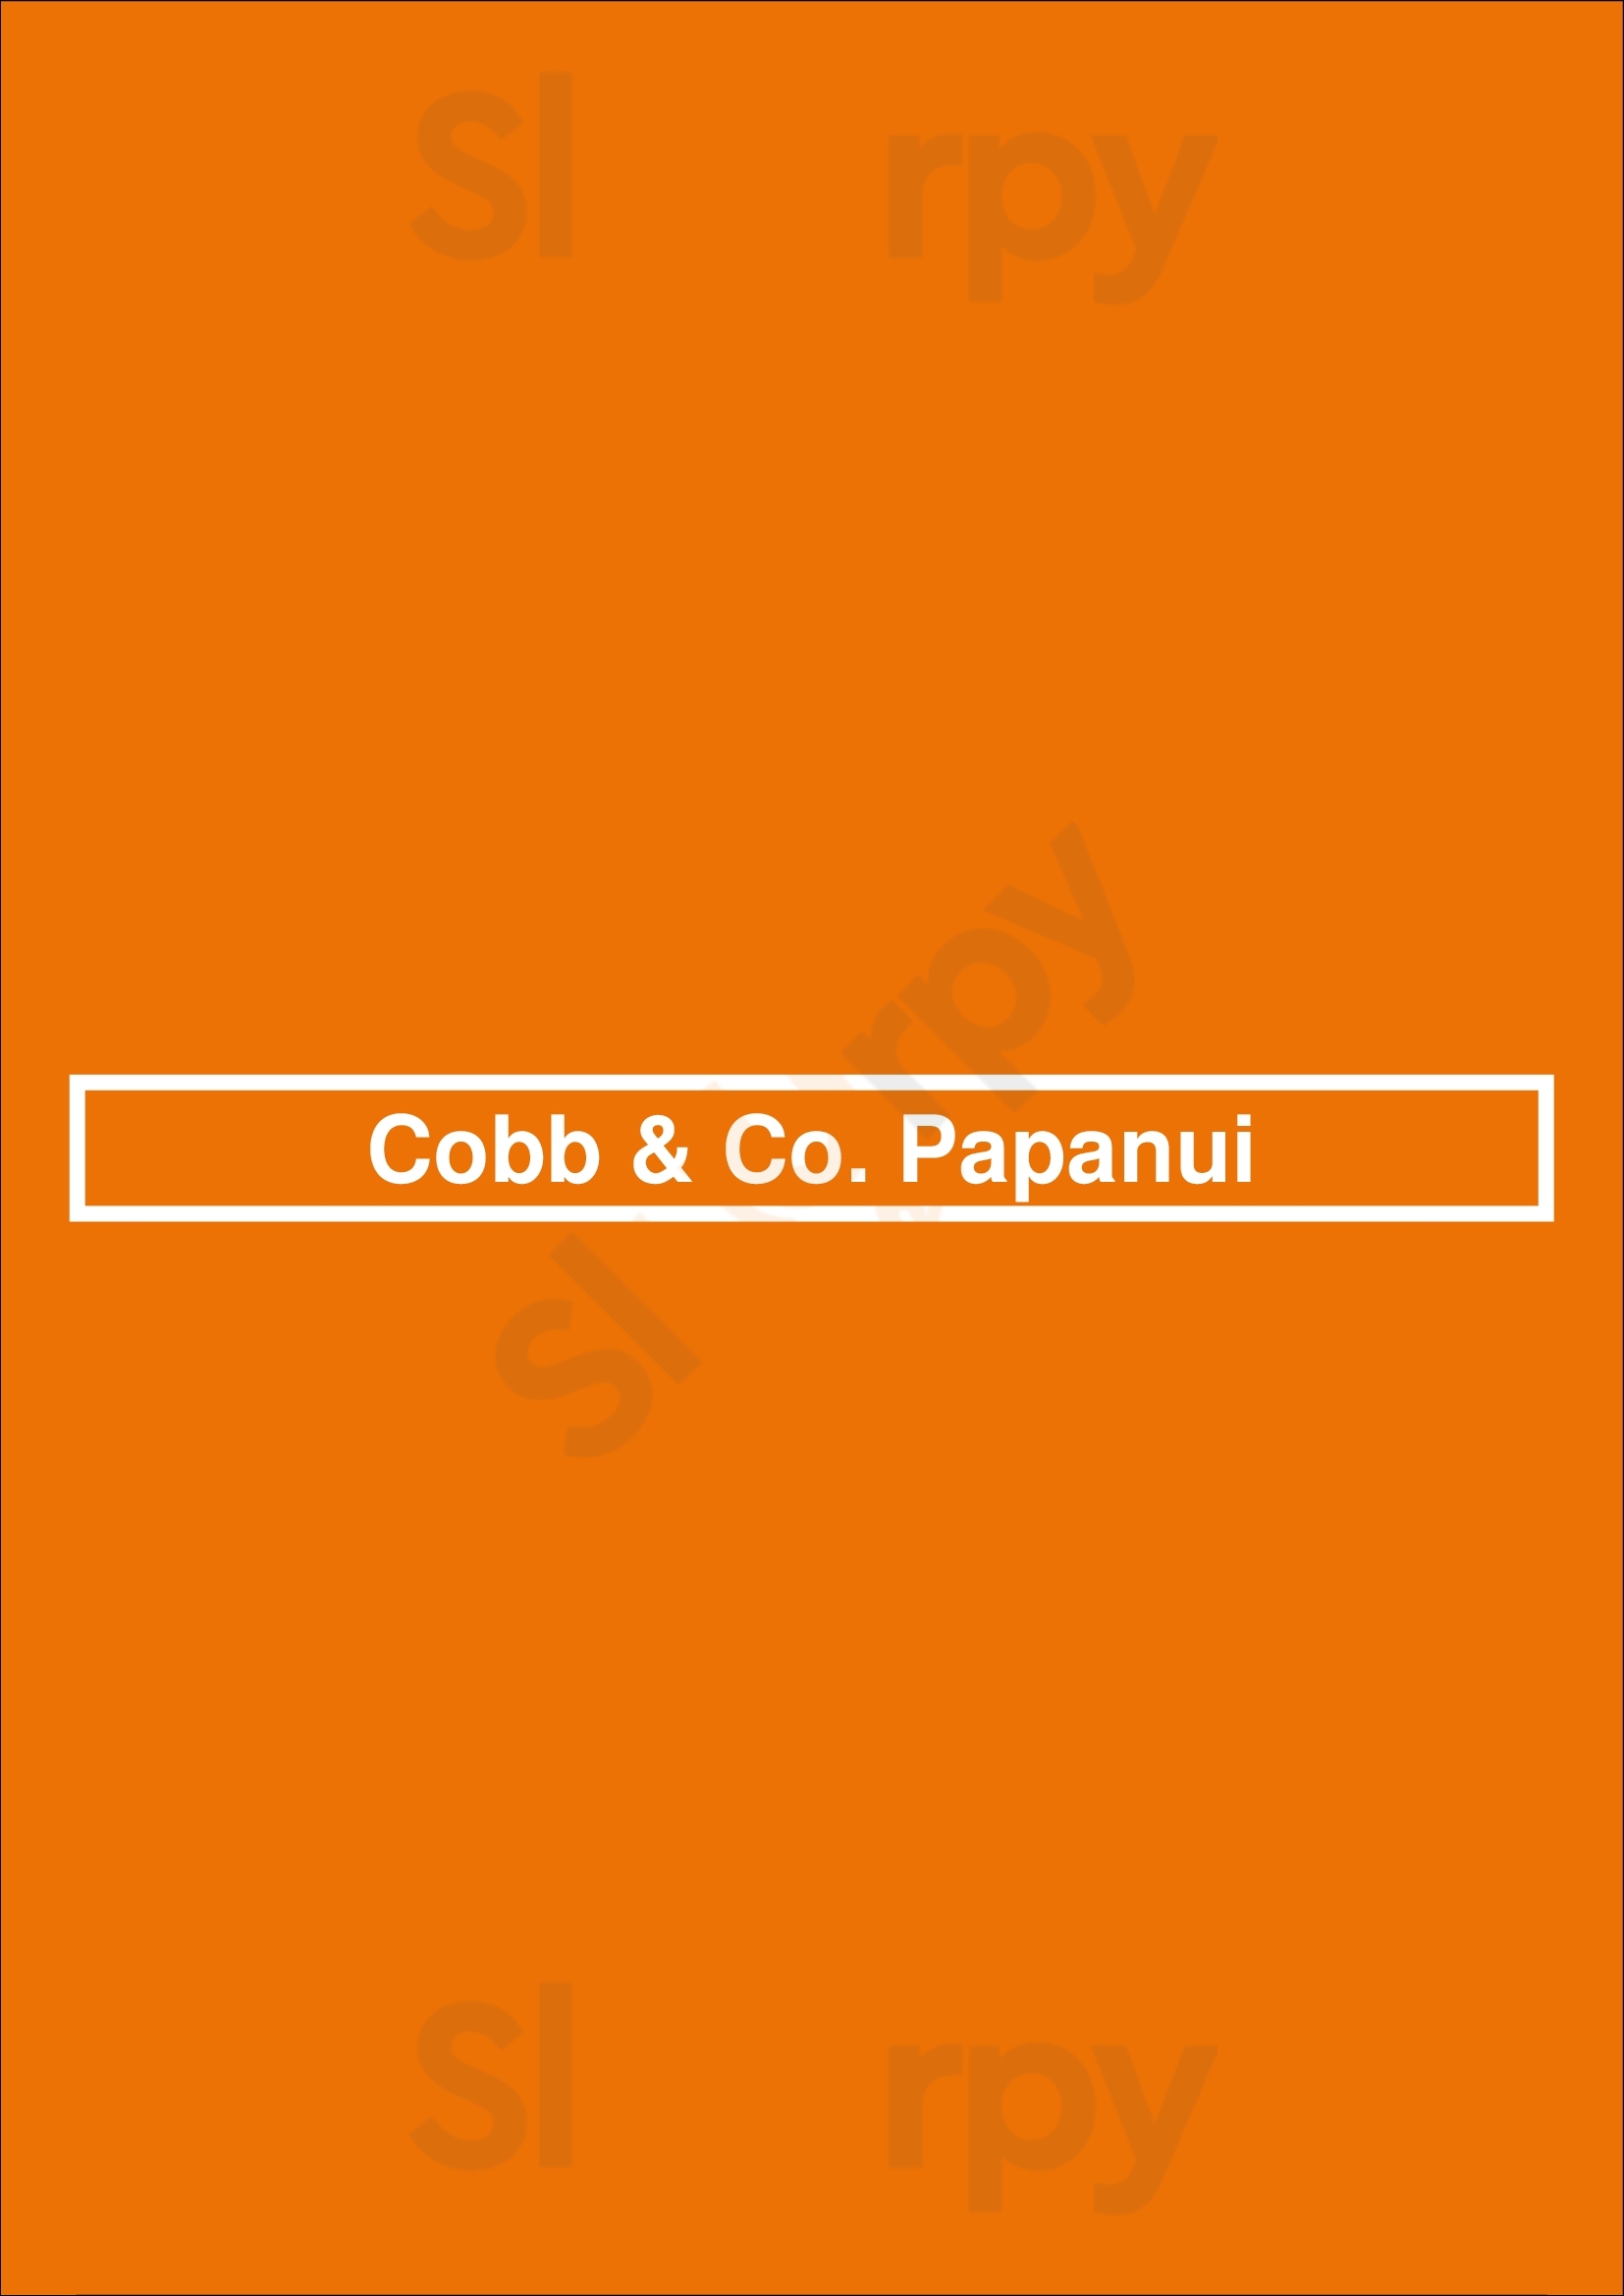 Cobb & Co. Papanui Christchurch Menu - 1